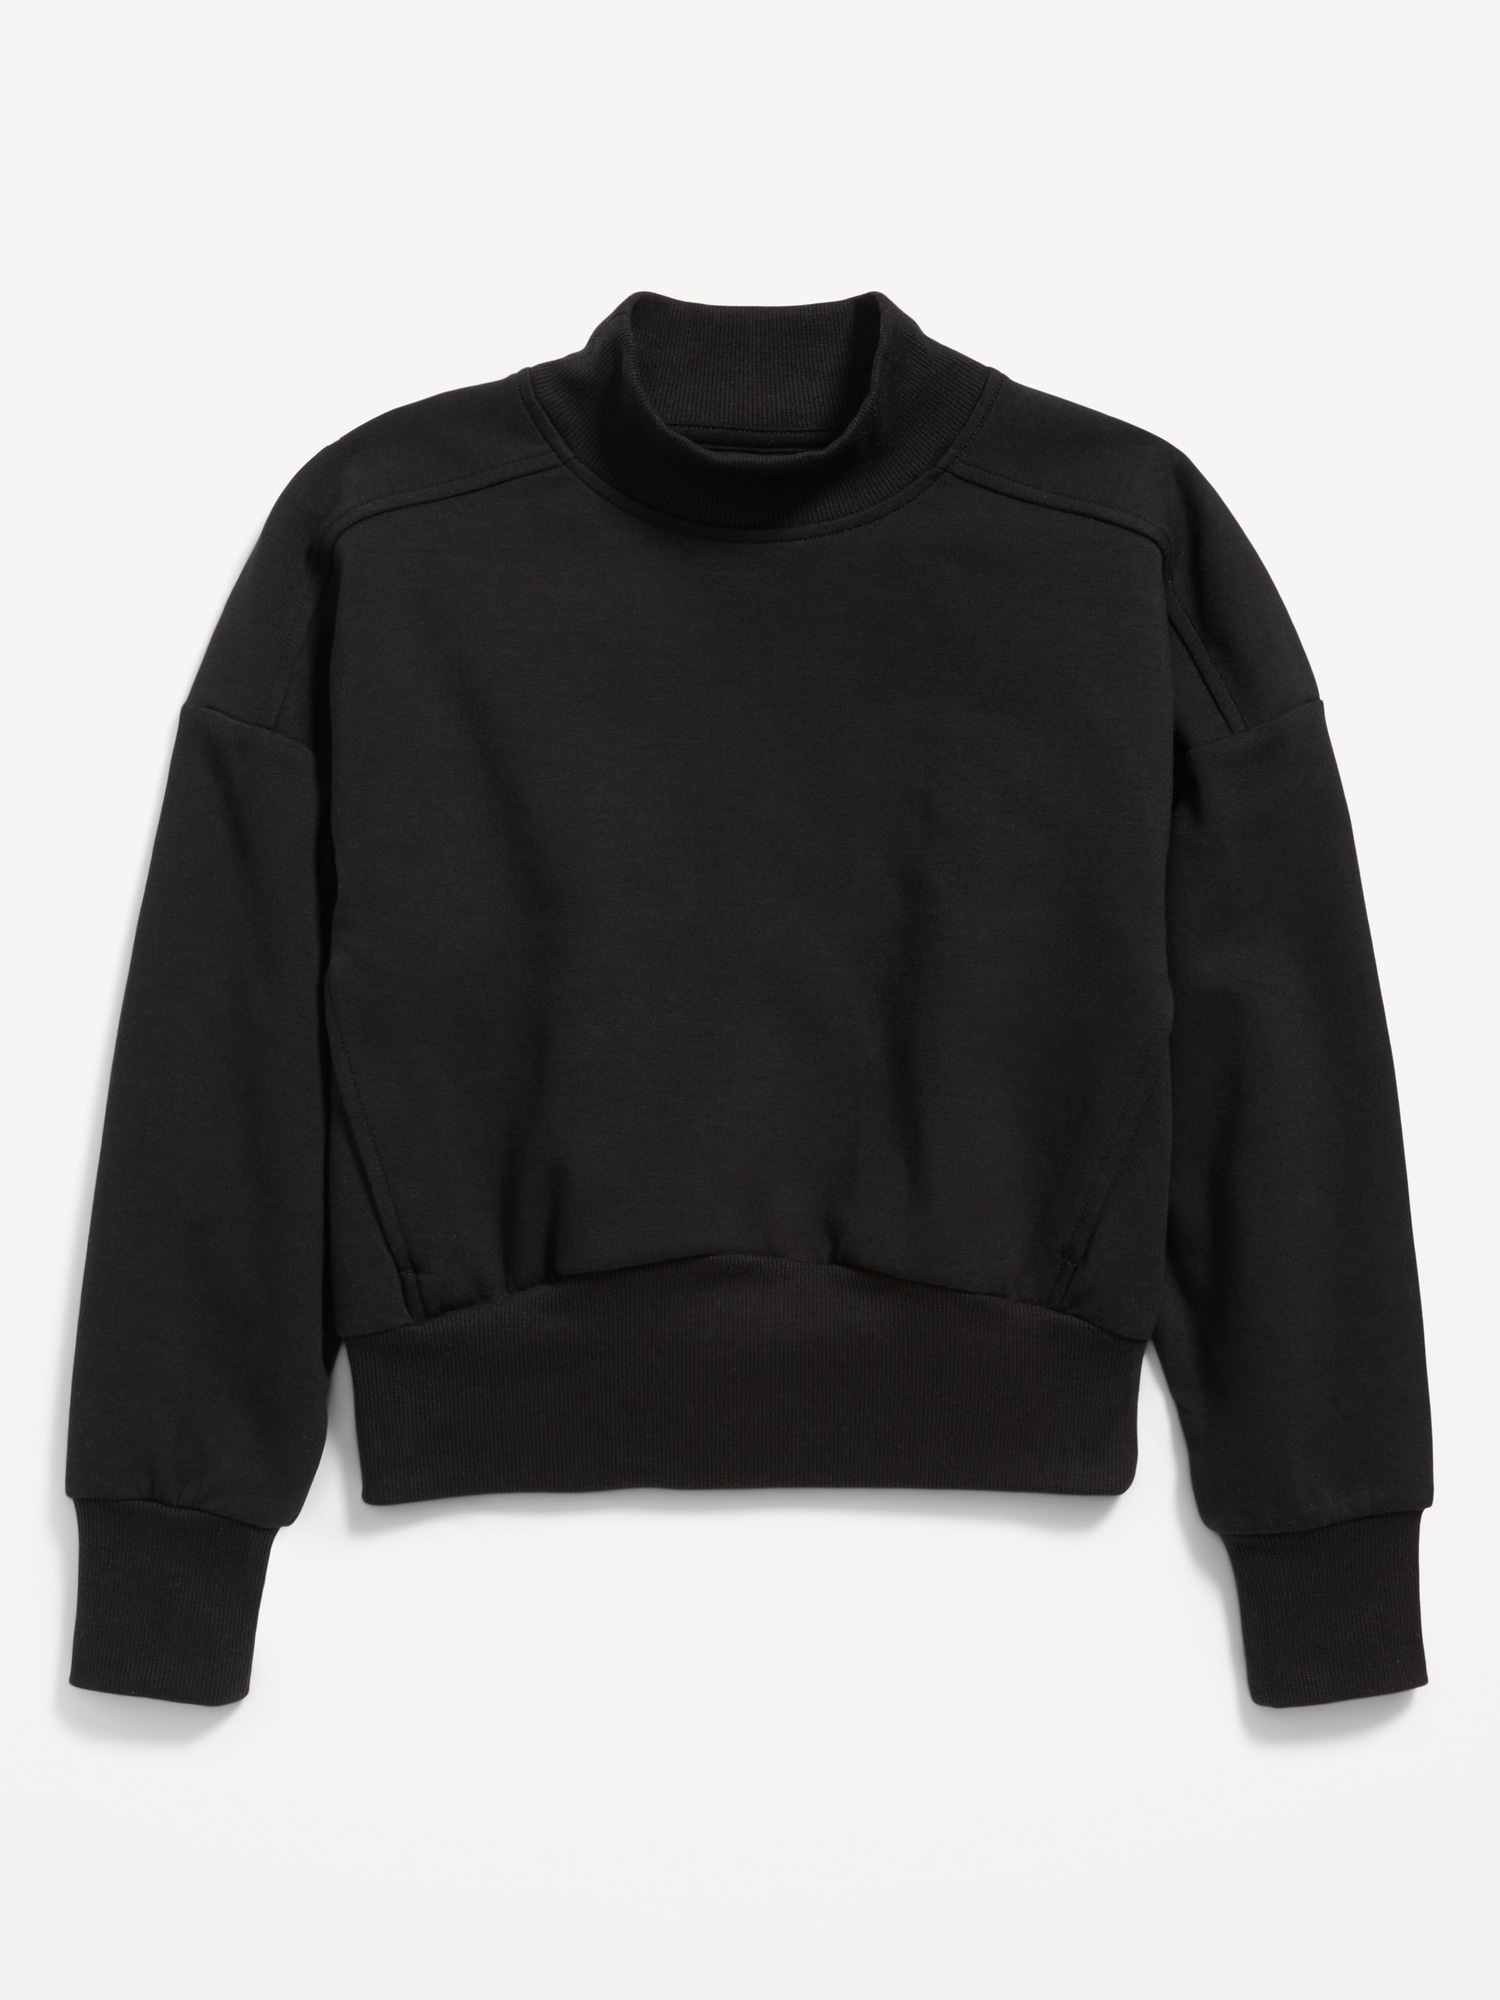 Old Navy Dynamic Fleece Mock-Neck Hidden-Pocket Sweatshirt for Girls black. 1